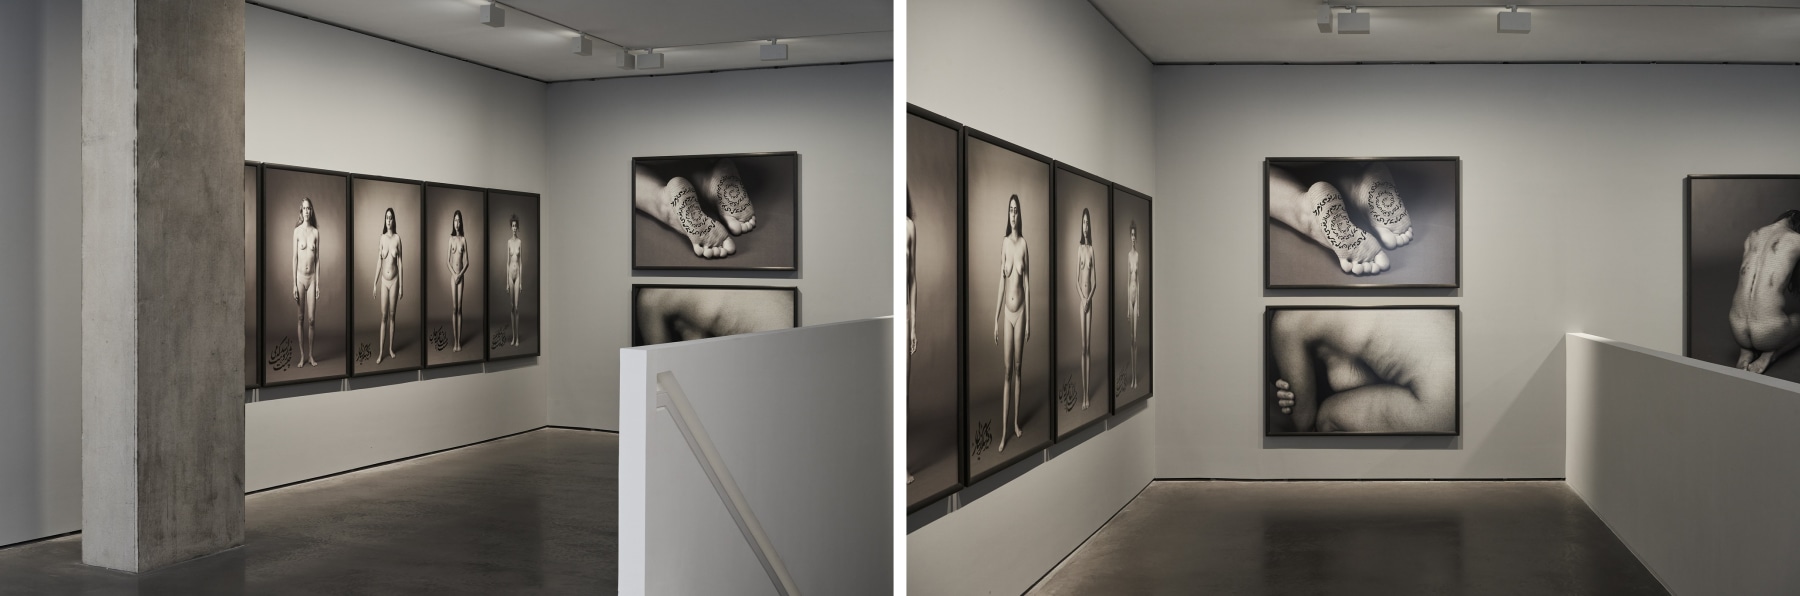 Shirin Neshat: The Fury - Goodman Gallery London - Viewing Room - Goodman Gallery Viewing Rooms